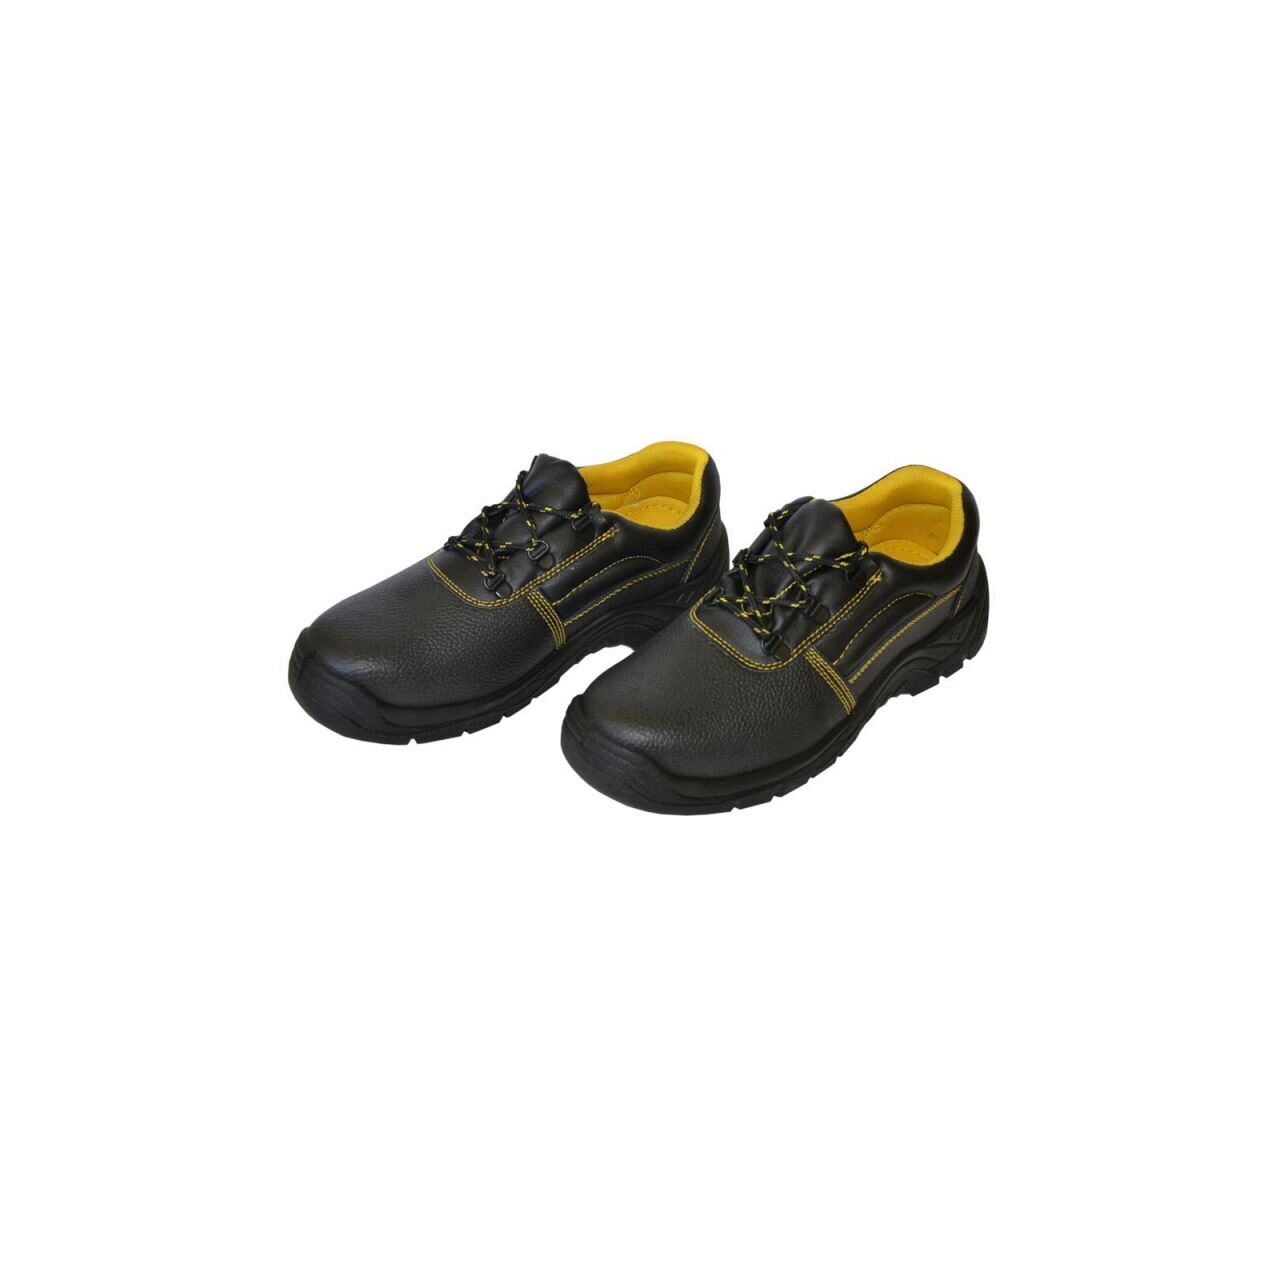 Pantofi de protectie - Pantofi de protectie FS-316 S3 SRC cu bombeu si lamela metalica, bilden.ro